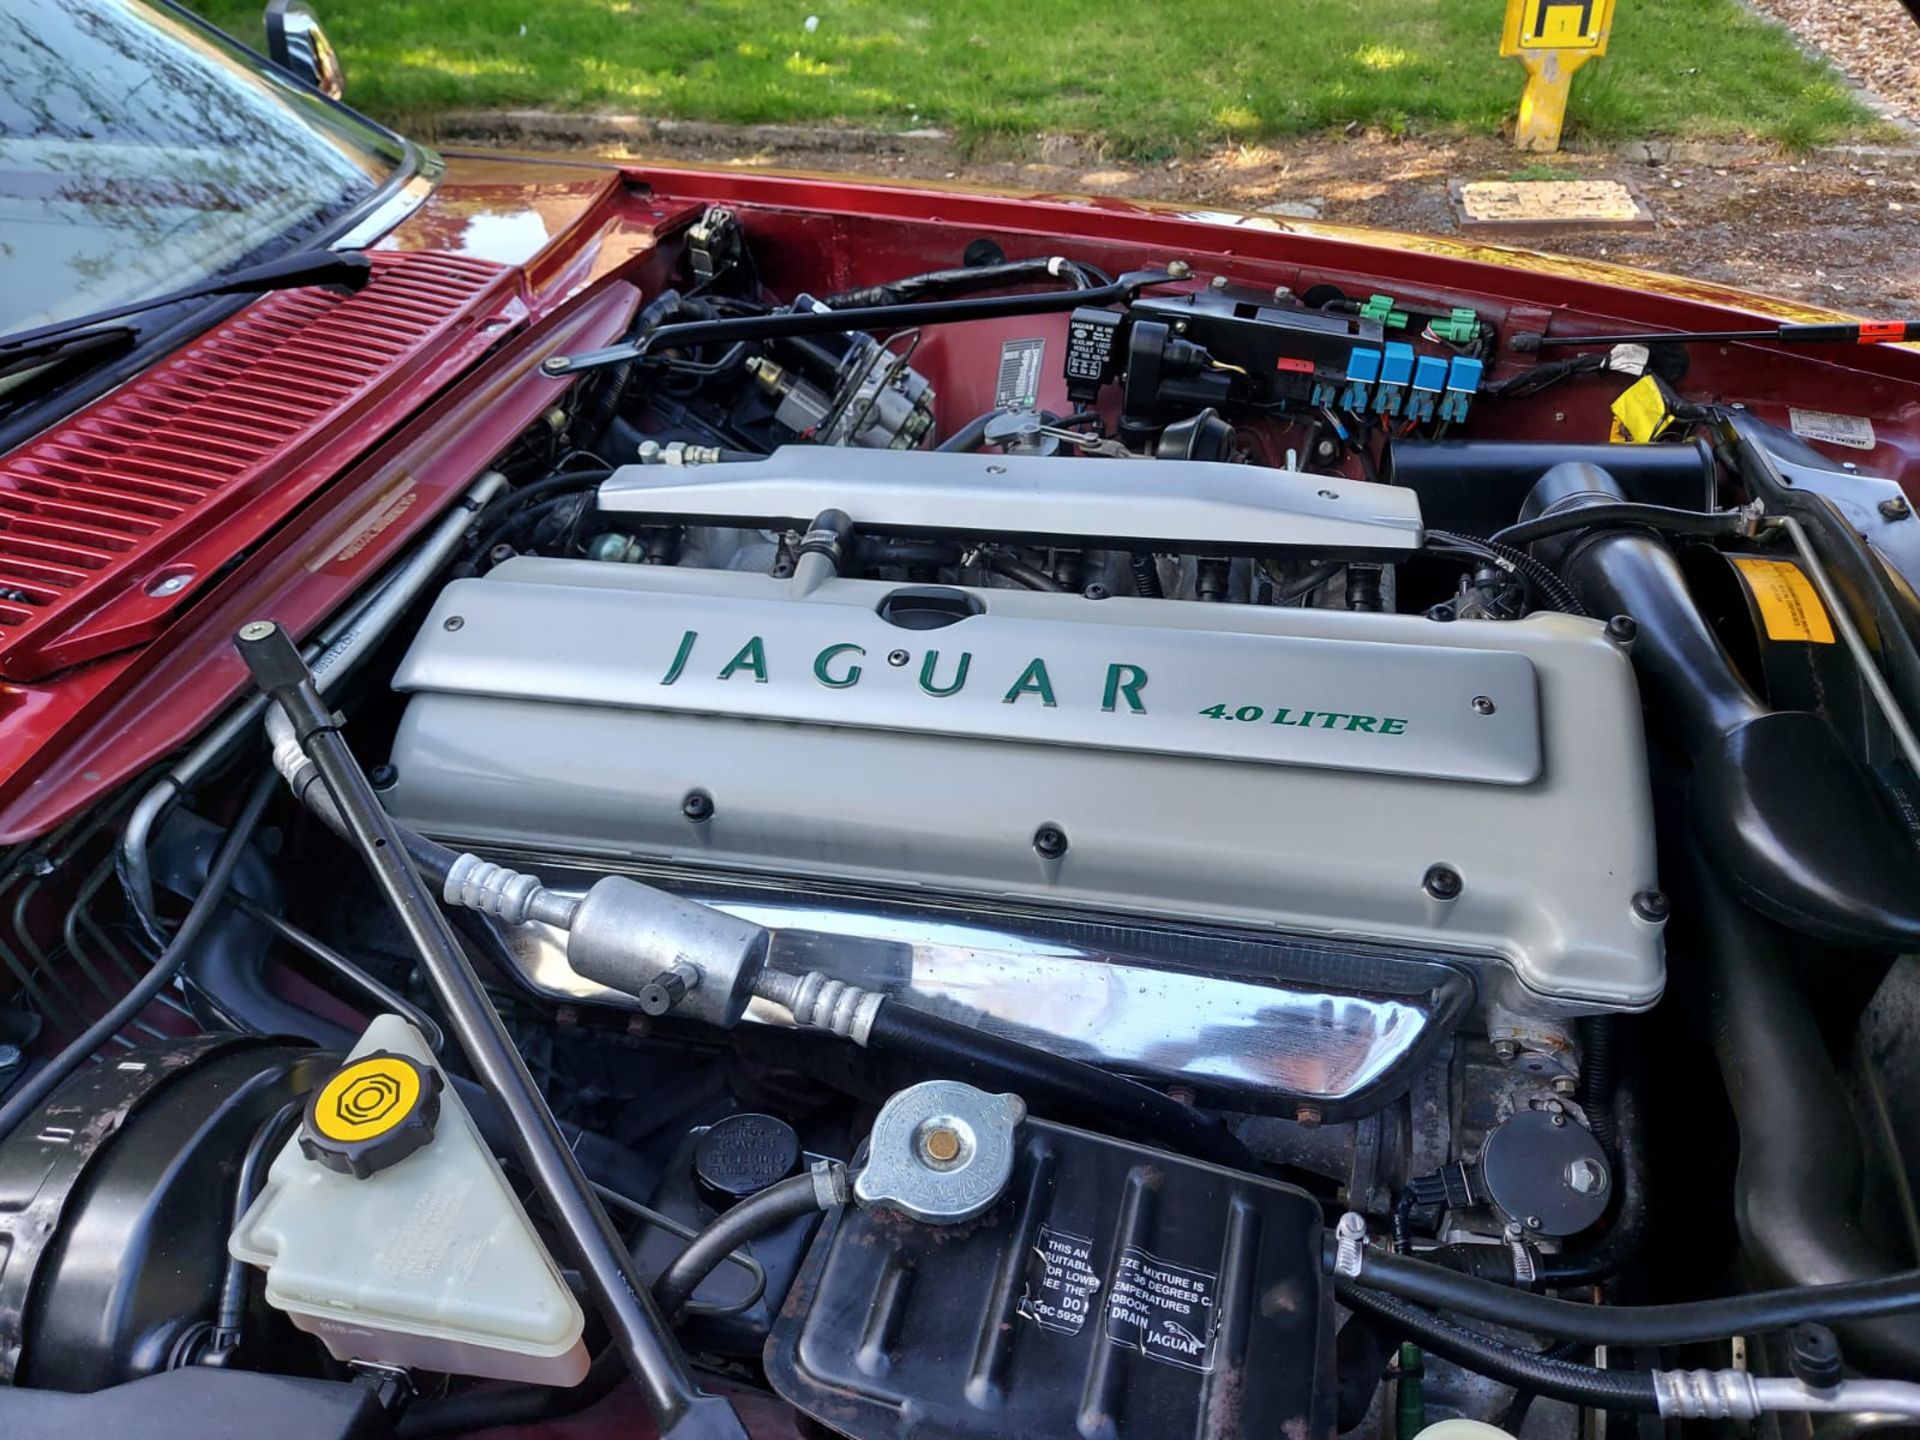 1995 Jaguar XJ-S 4.0 Celebration Auto 6,500 miles from new - Image 7 of 16